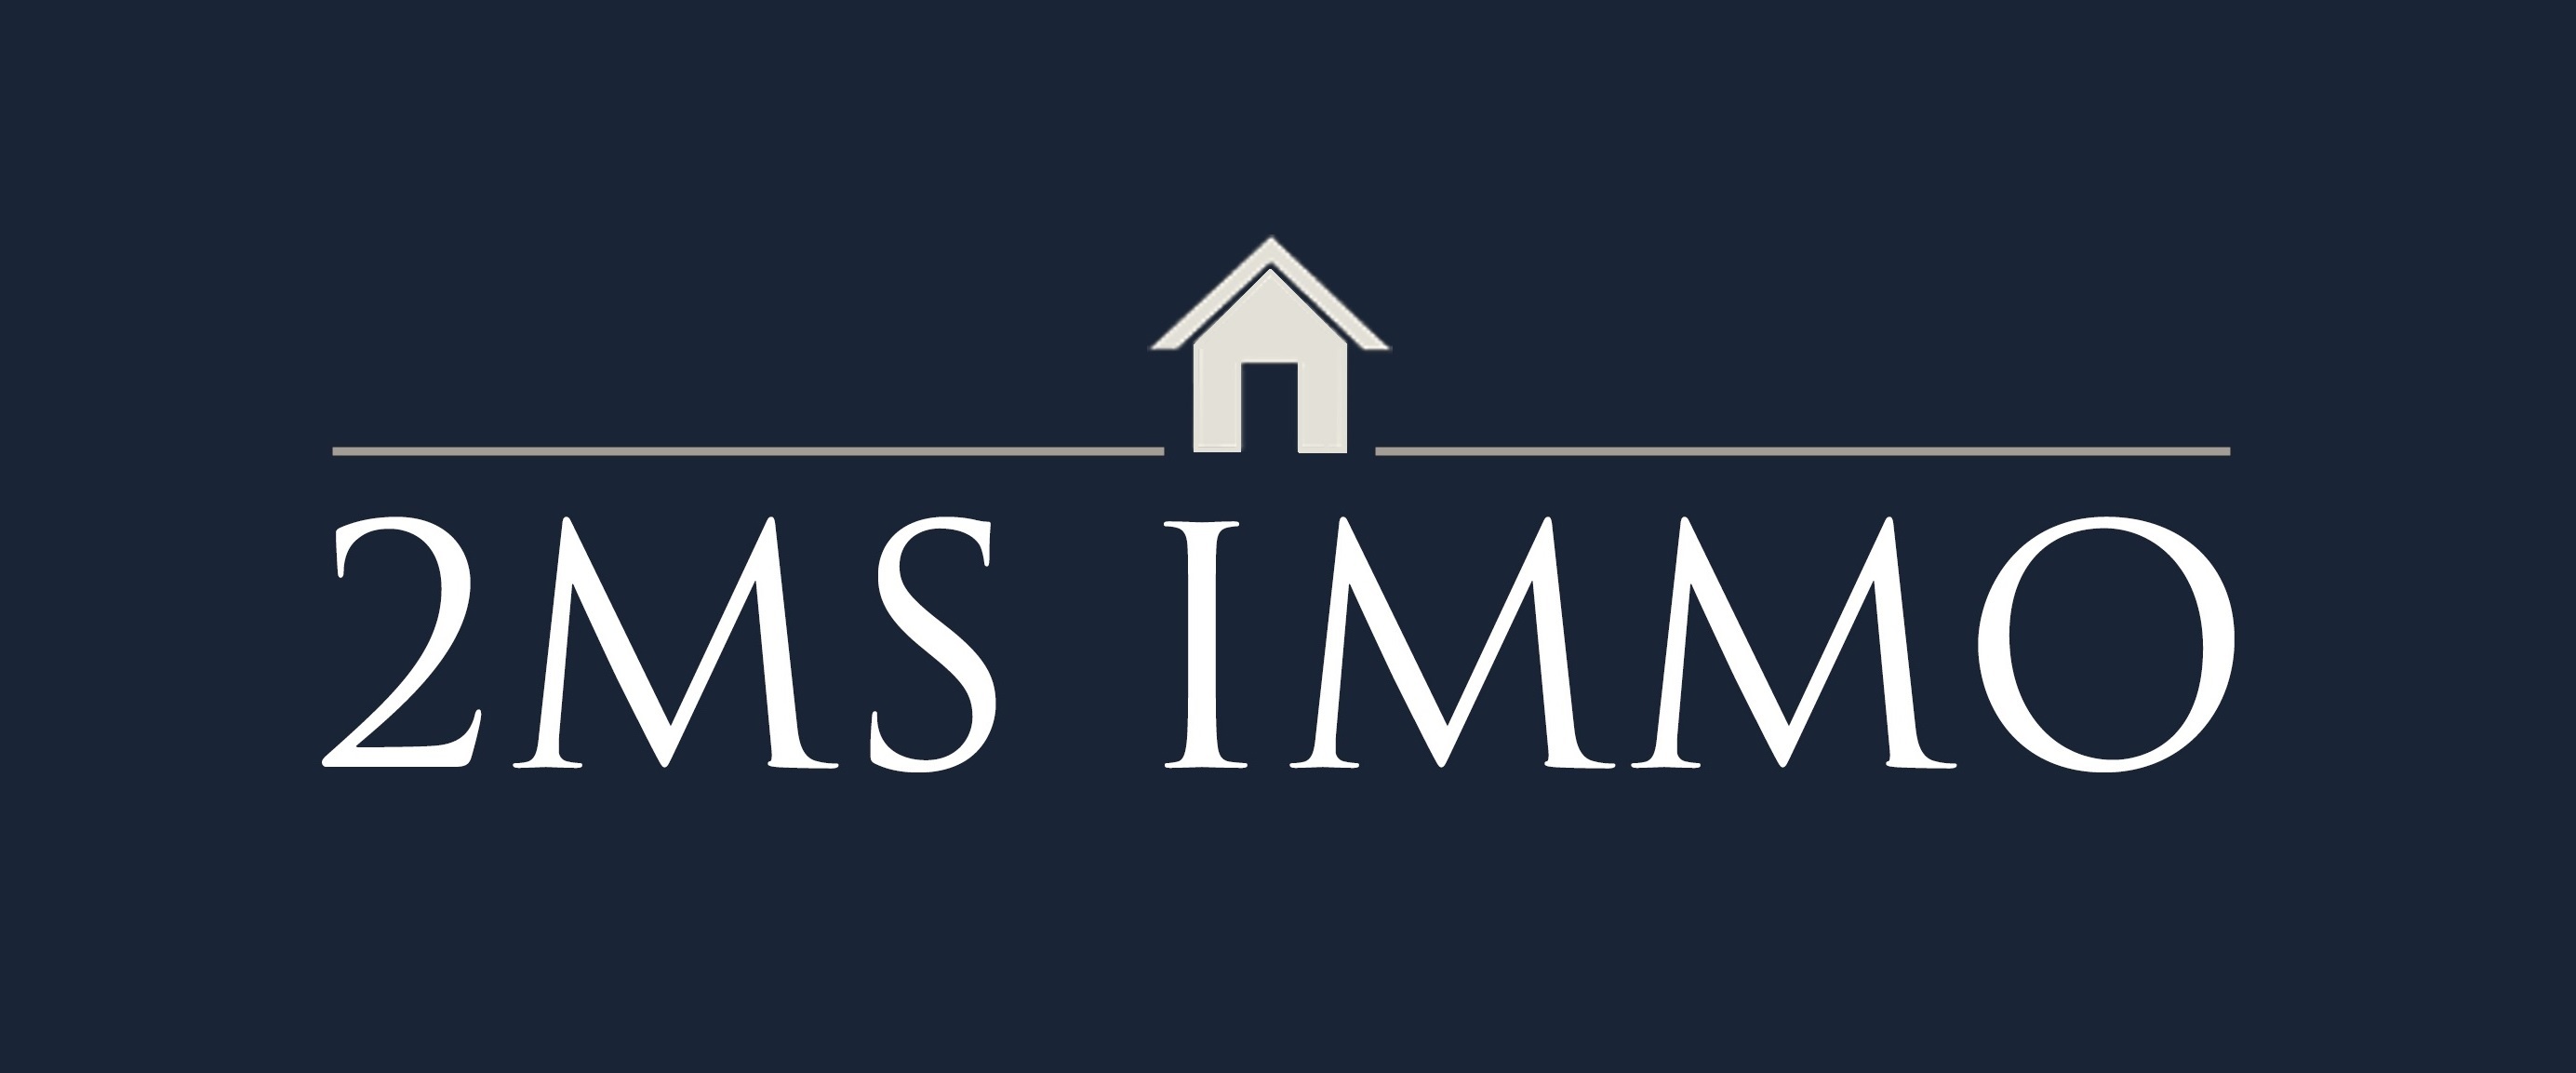 logo 2MS IMMO